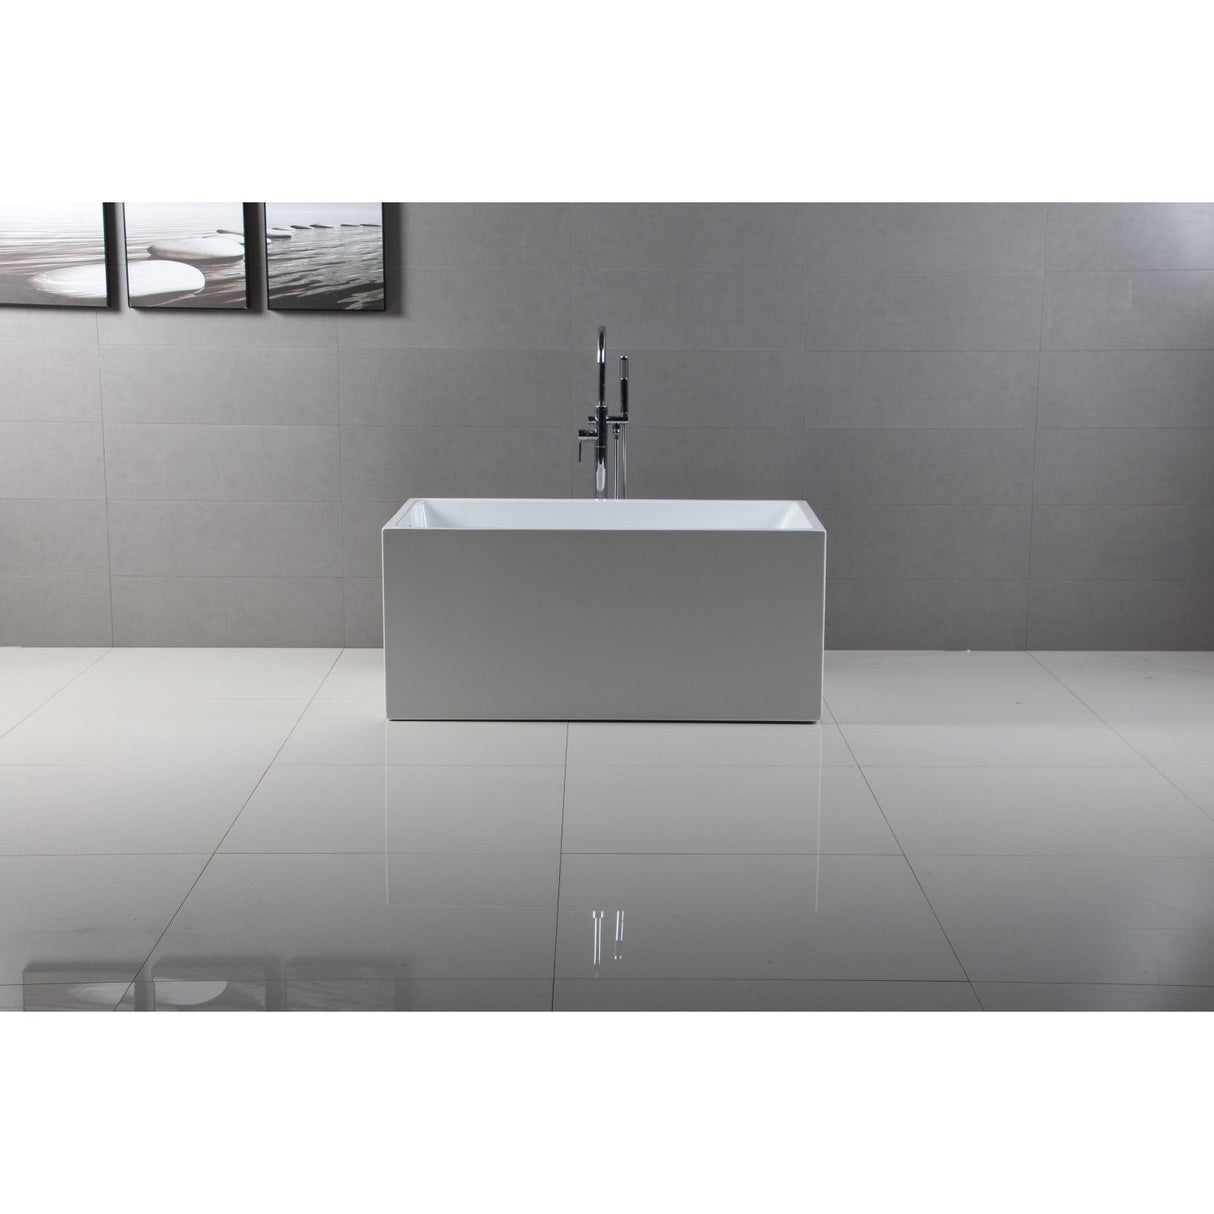 Aqua Eden VTSQ512823 51-Inch Acrylic Freestanding Tub with Drain, White